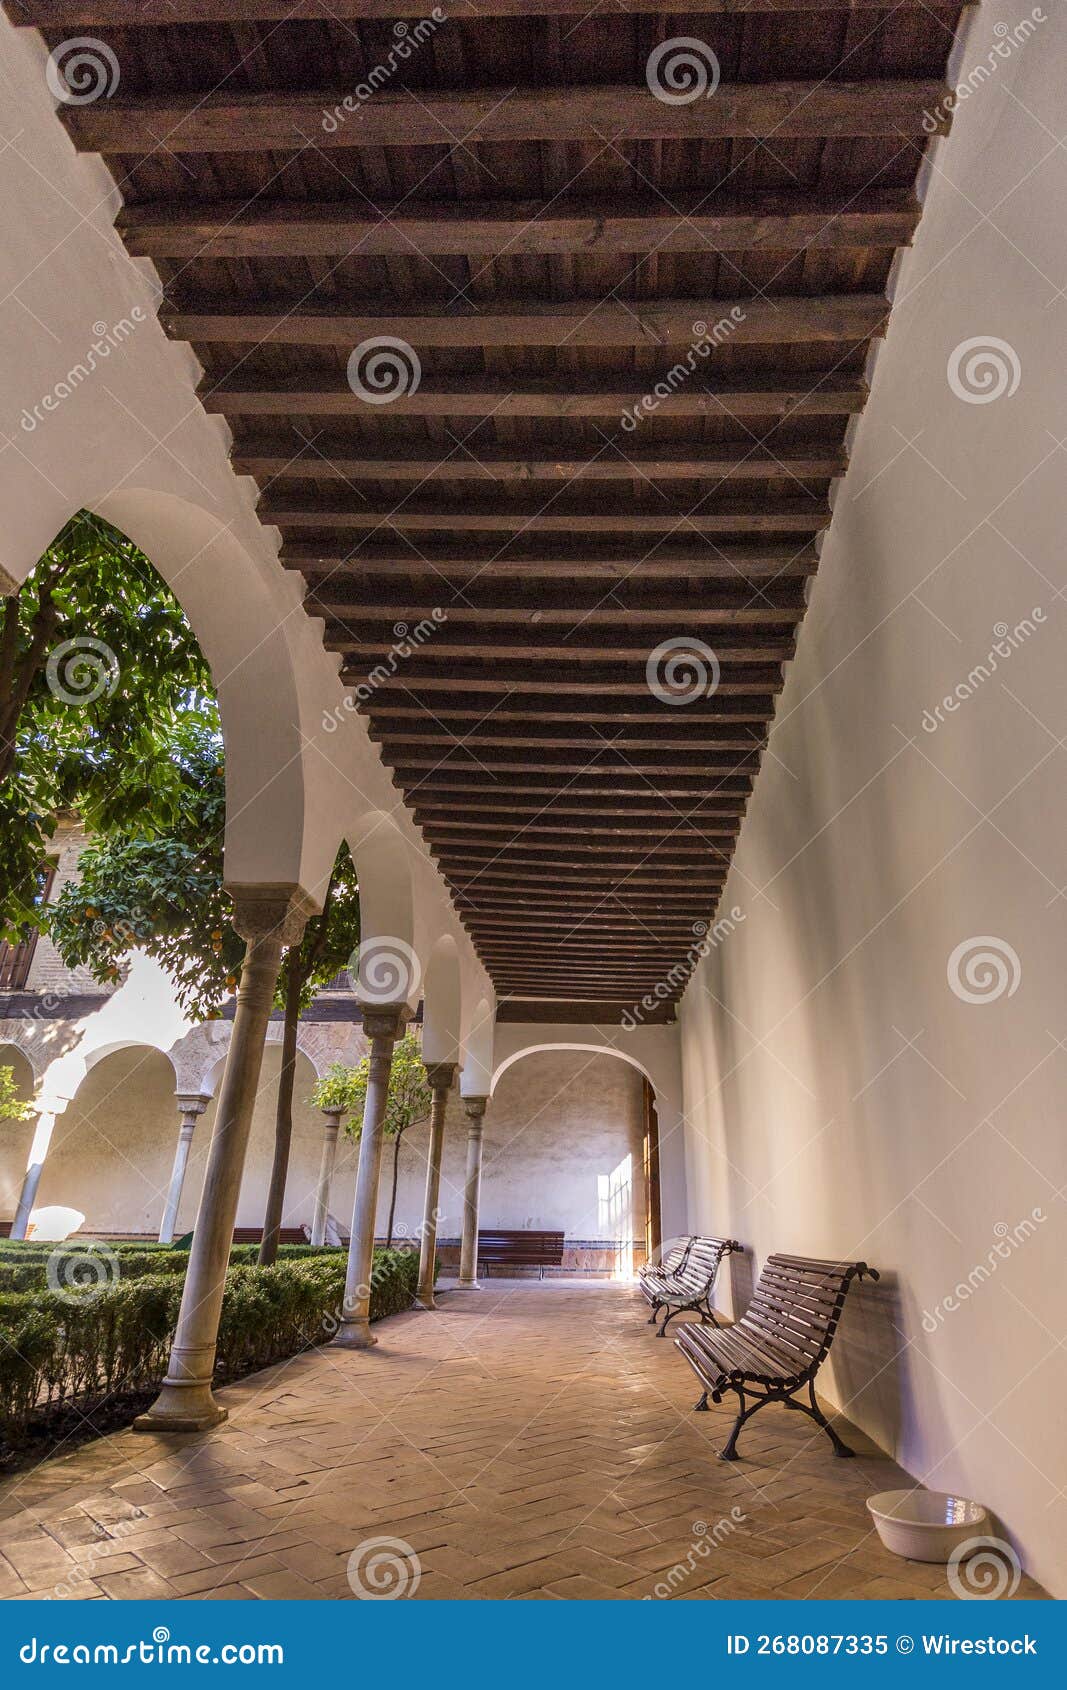 vertical shot of wooden benches in espacio santa clara in seville, spain